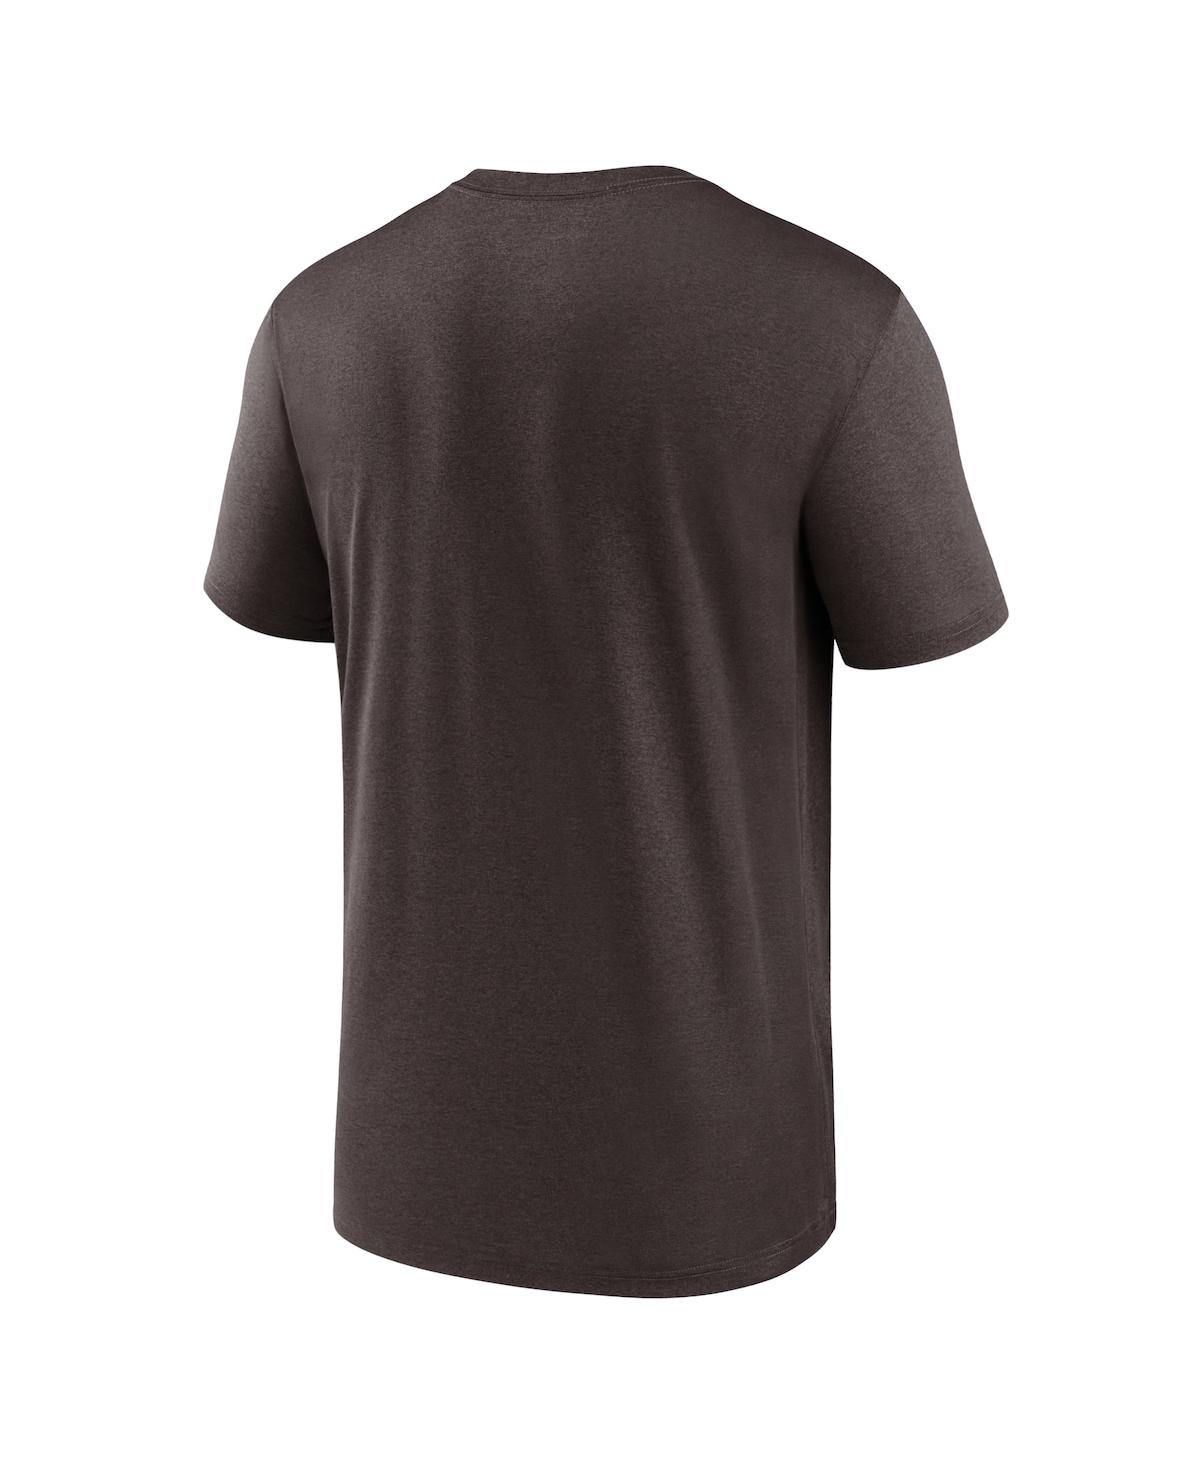 Shop Nike Men's  Brown Cleveland Browns Horizontal Lockup Legend Performance T-shirt